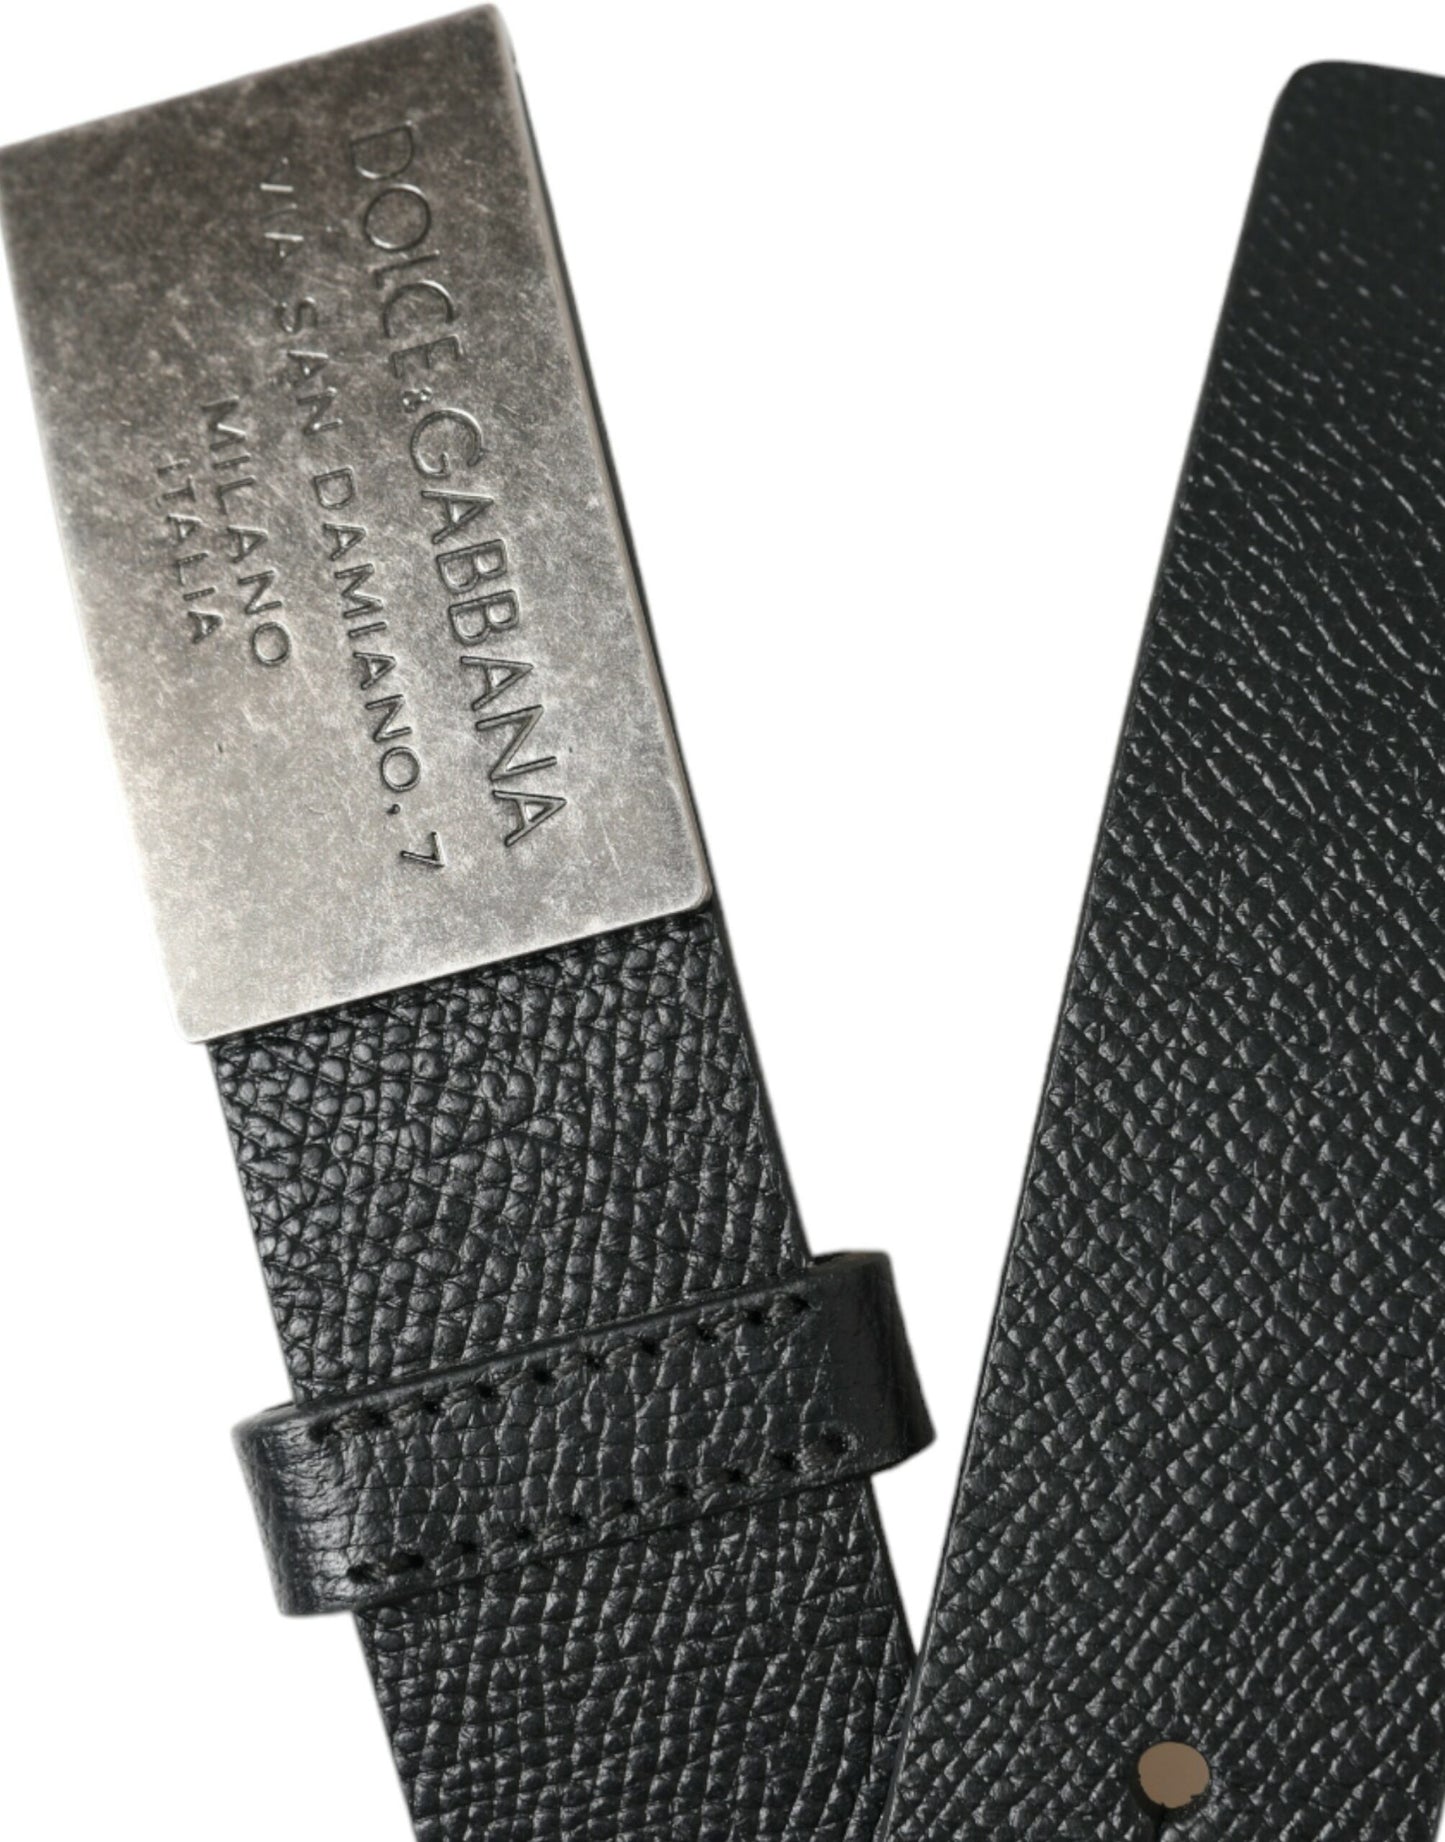 Dolce & Gabbana Men's Black Leather Silver Rectangle Buckle Belt